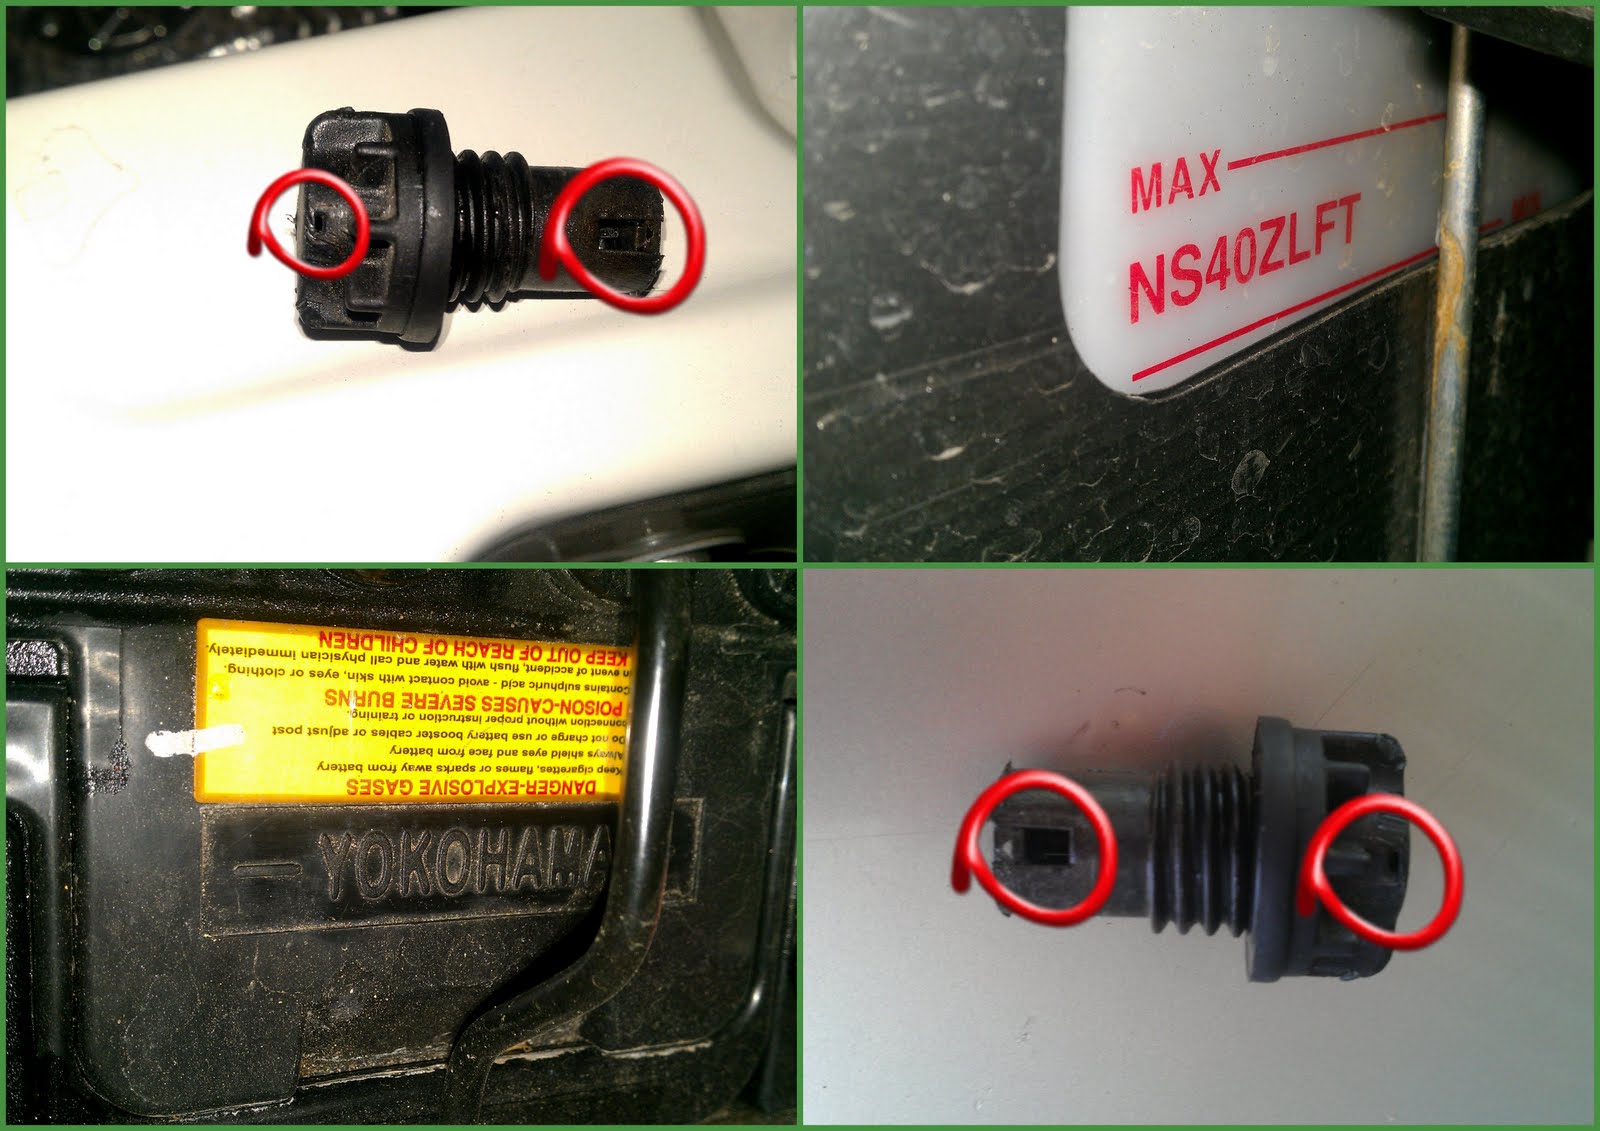 HomeMade DIY HowTo Make: How Perodua Alza Battery Leaks